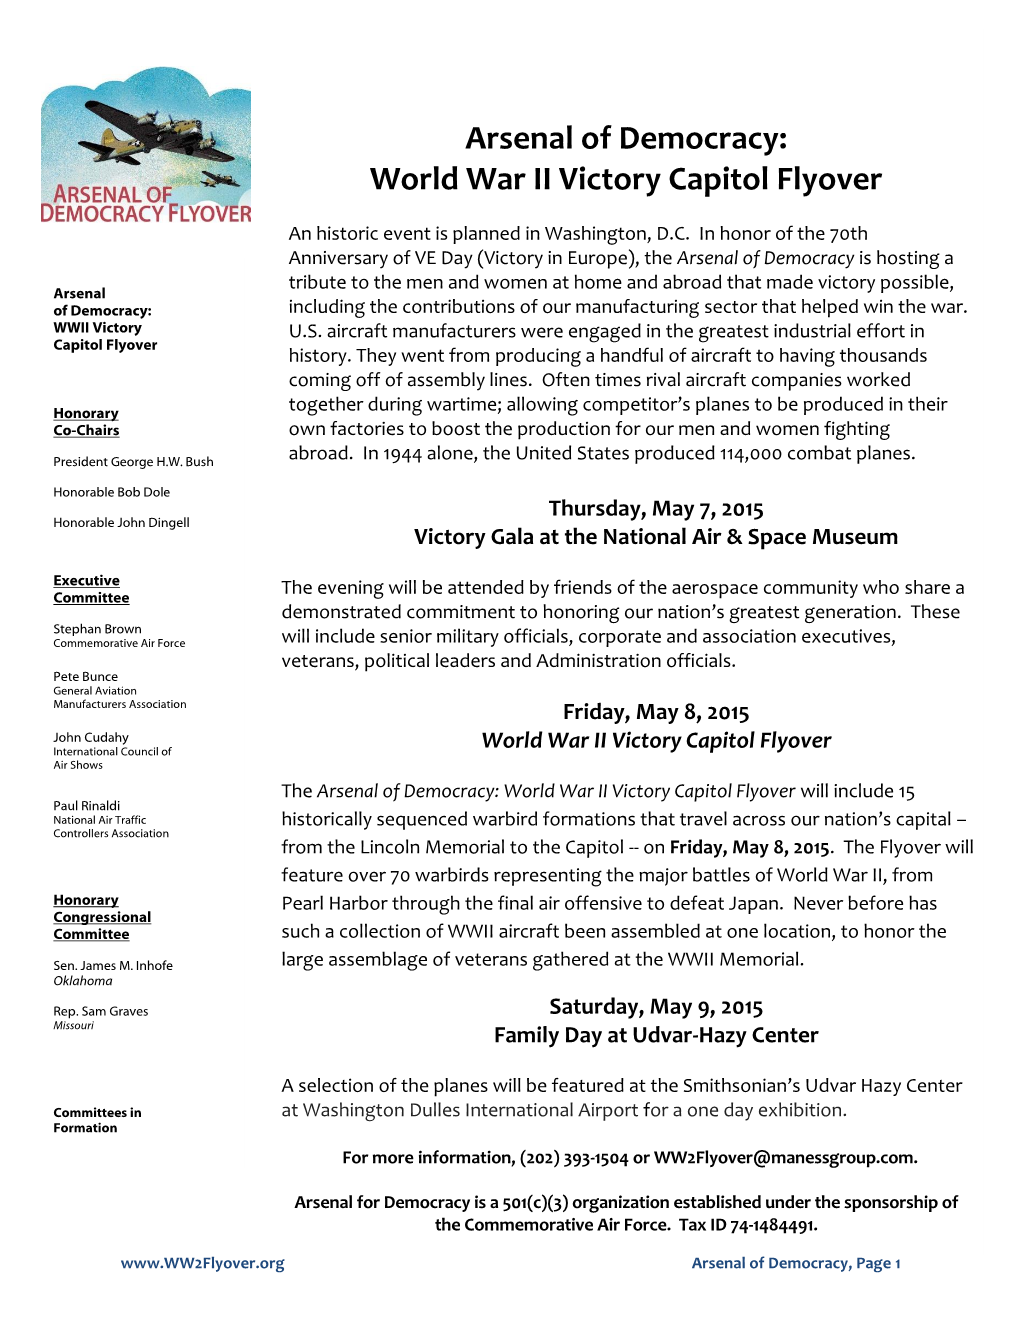 Arsenal of Democracy: World War II Victory Capitol Flyover